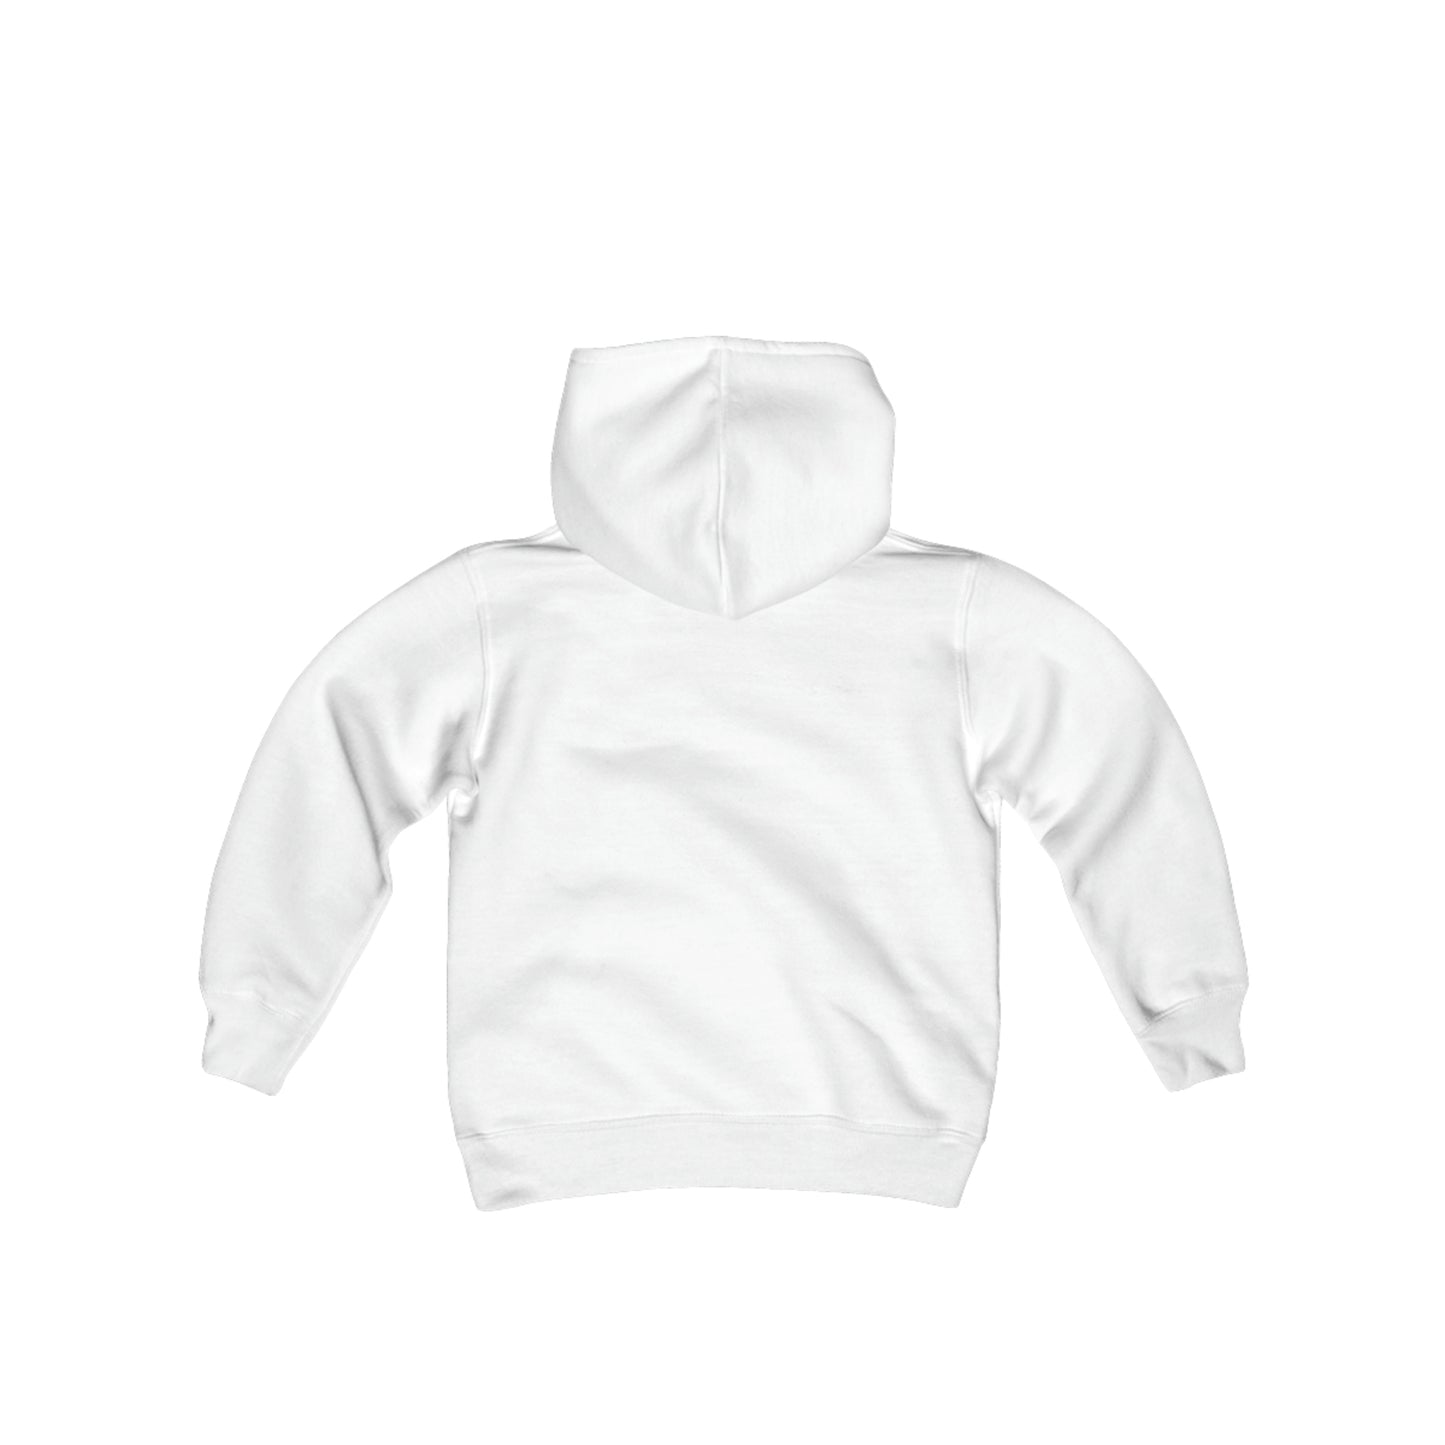 Youth Heavy Blend Hooded Sweatshirt - PC2